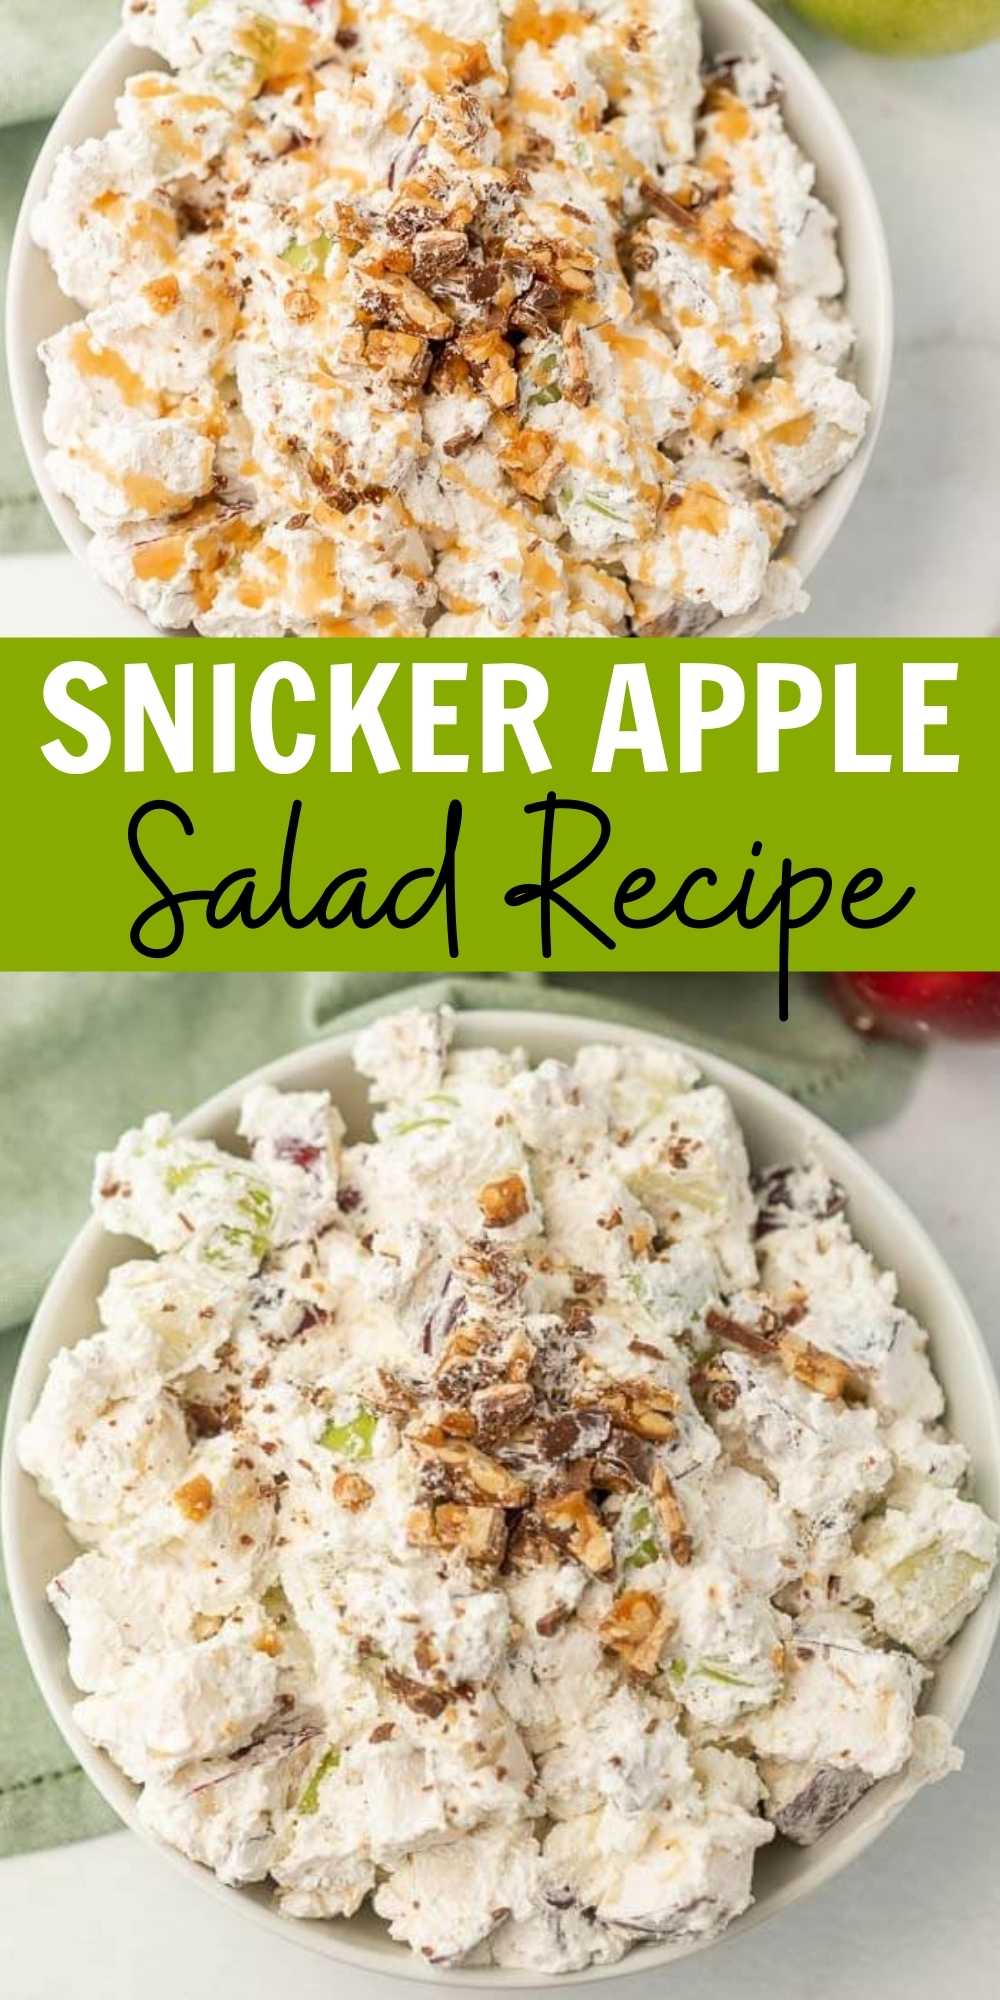 Snicker apple salad recipe - Easy Snicker Salad Recipe